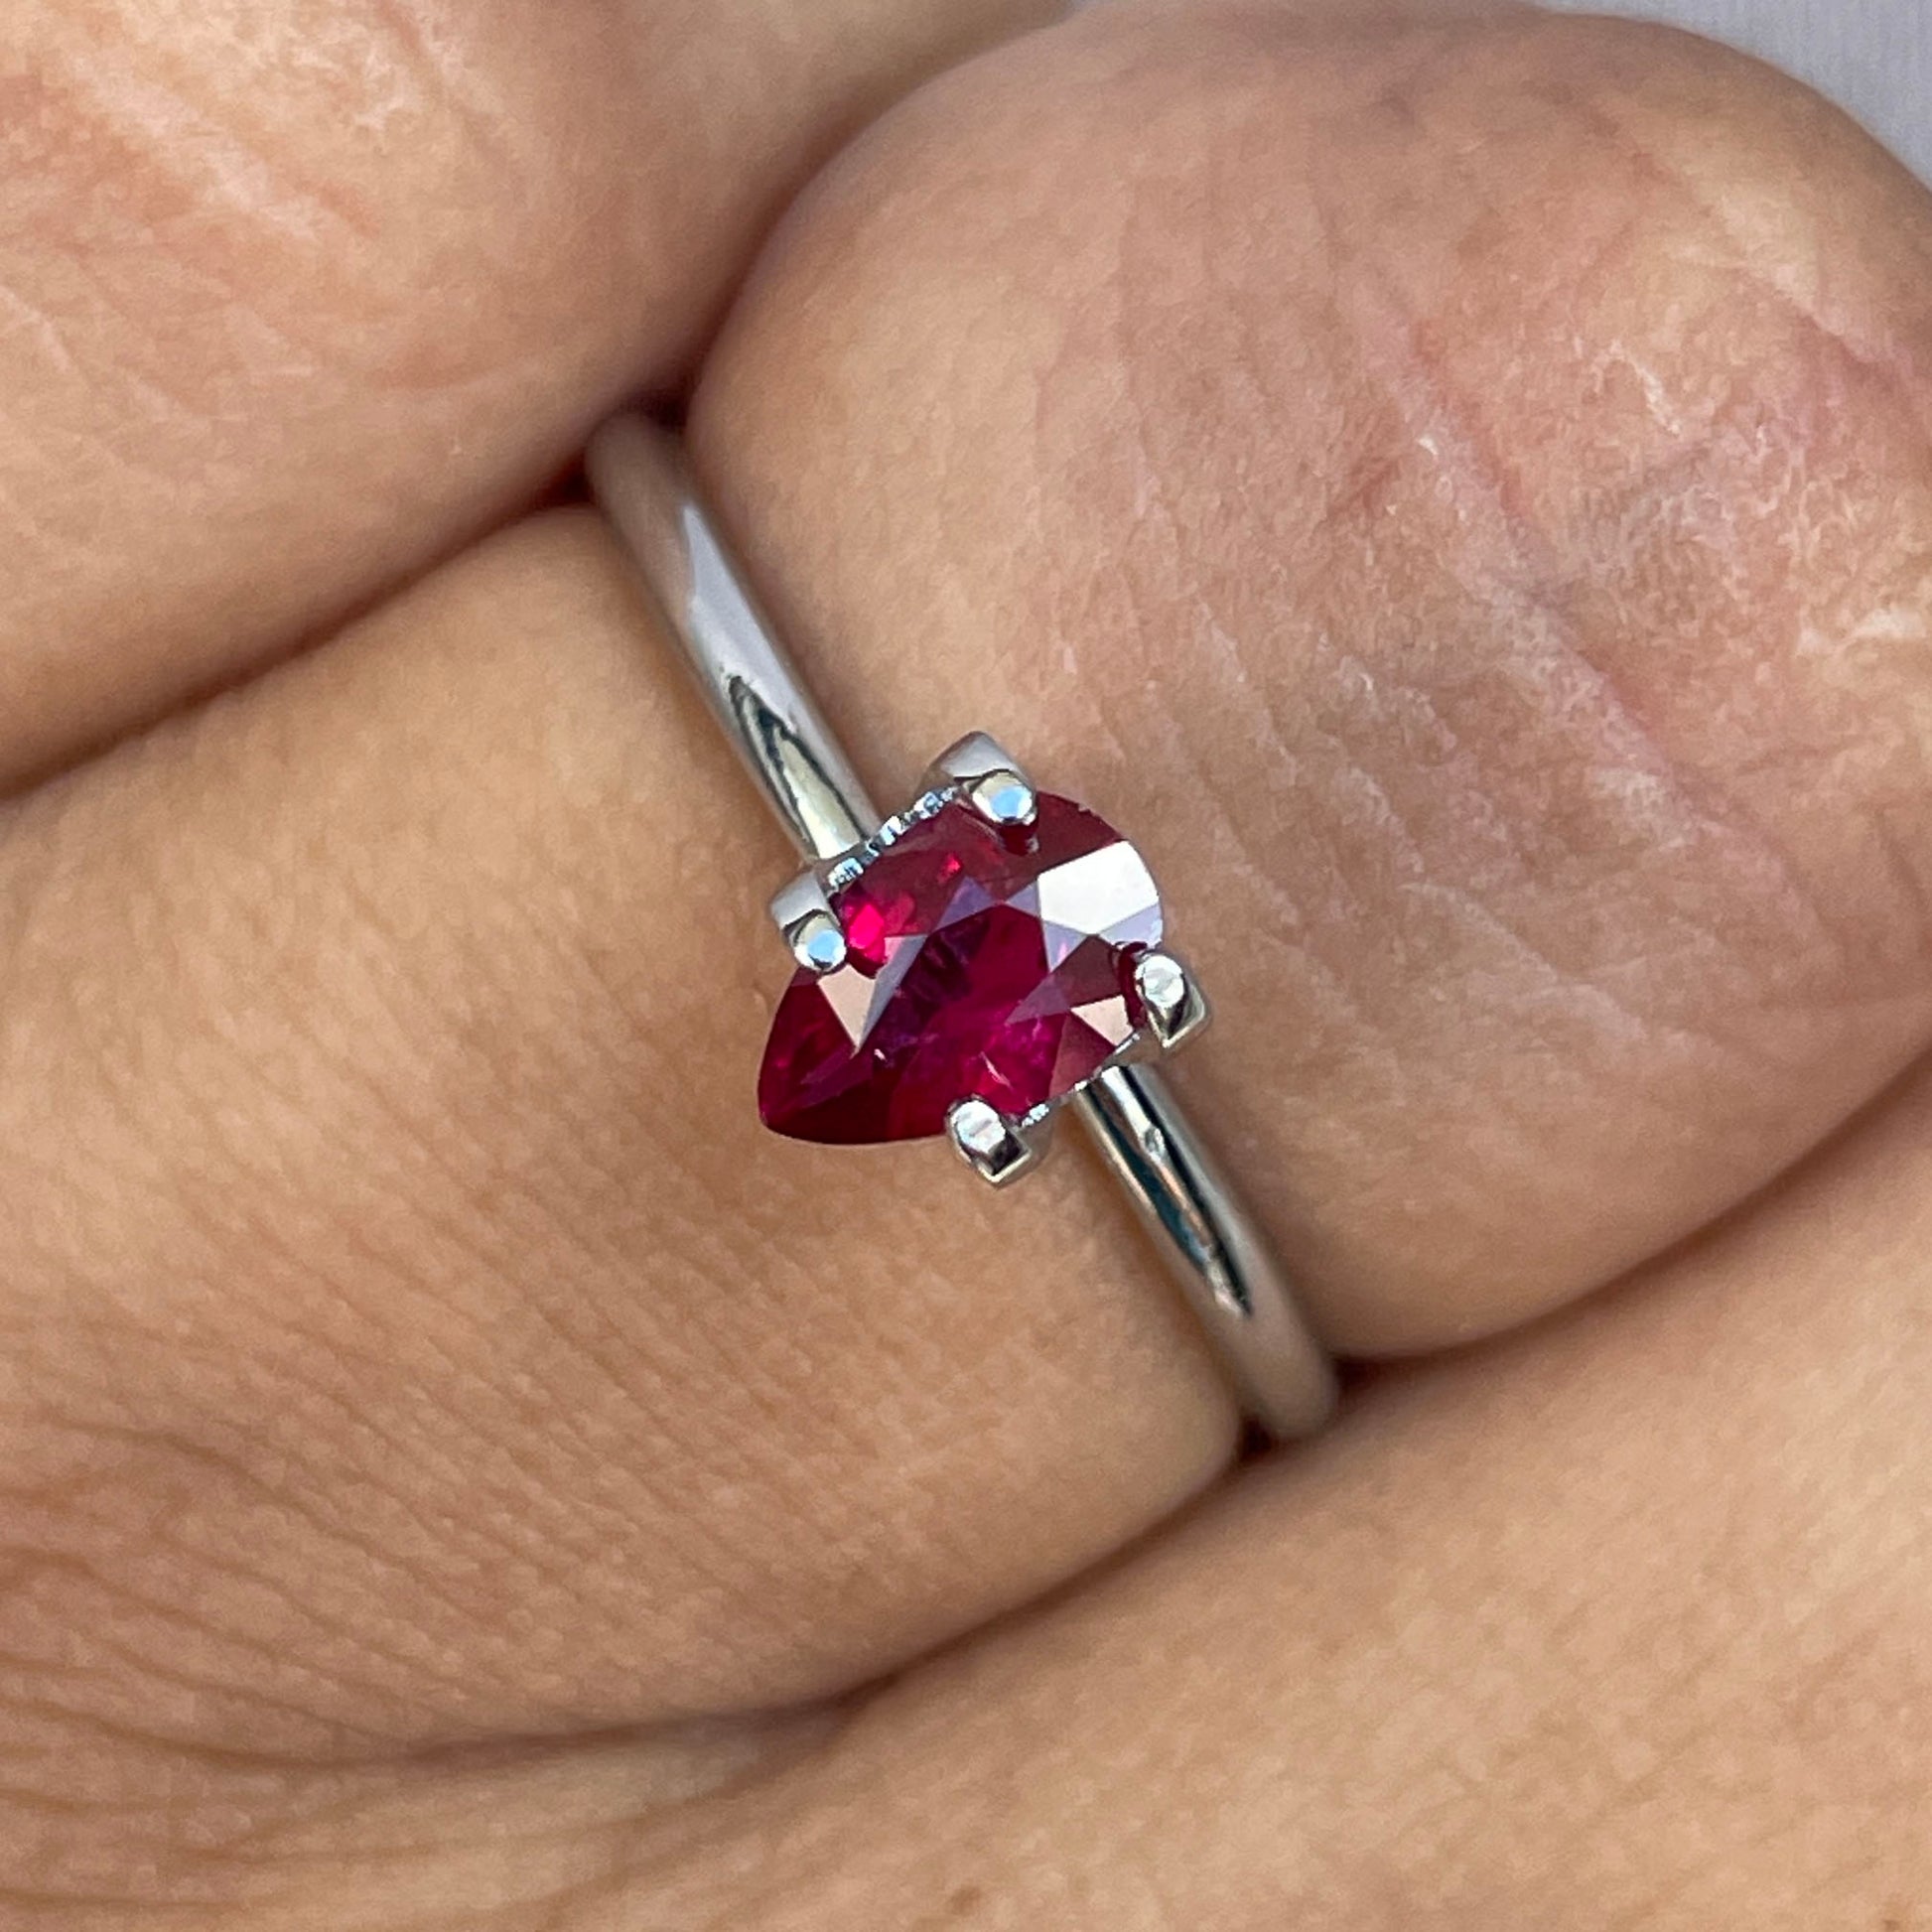 Natural Ruby Loose Gemstones 0.58 crt. San Francisco 49ers Ruby. Certified